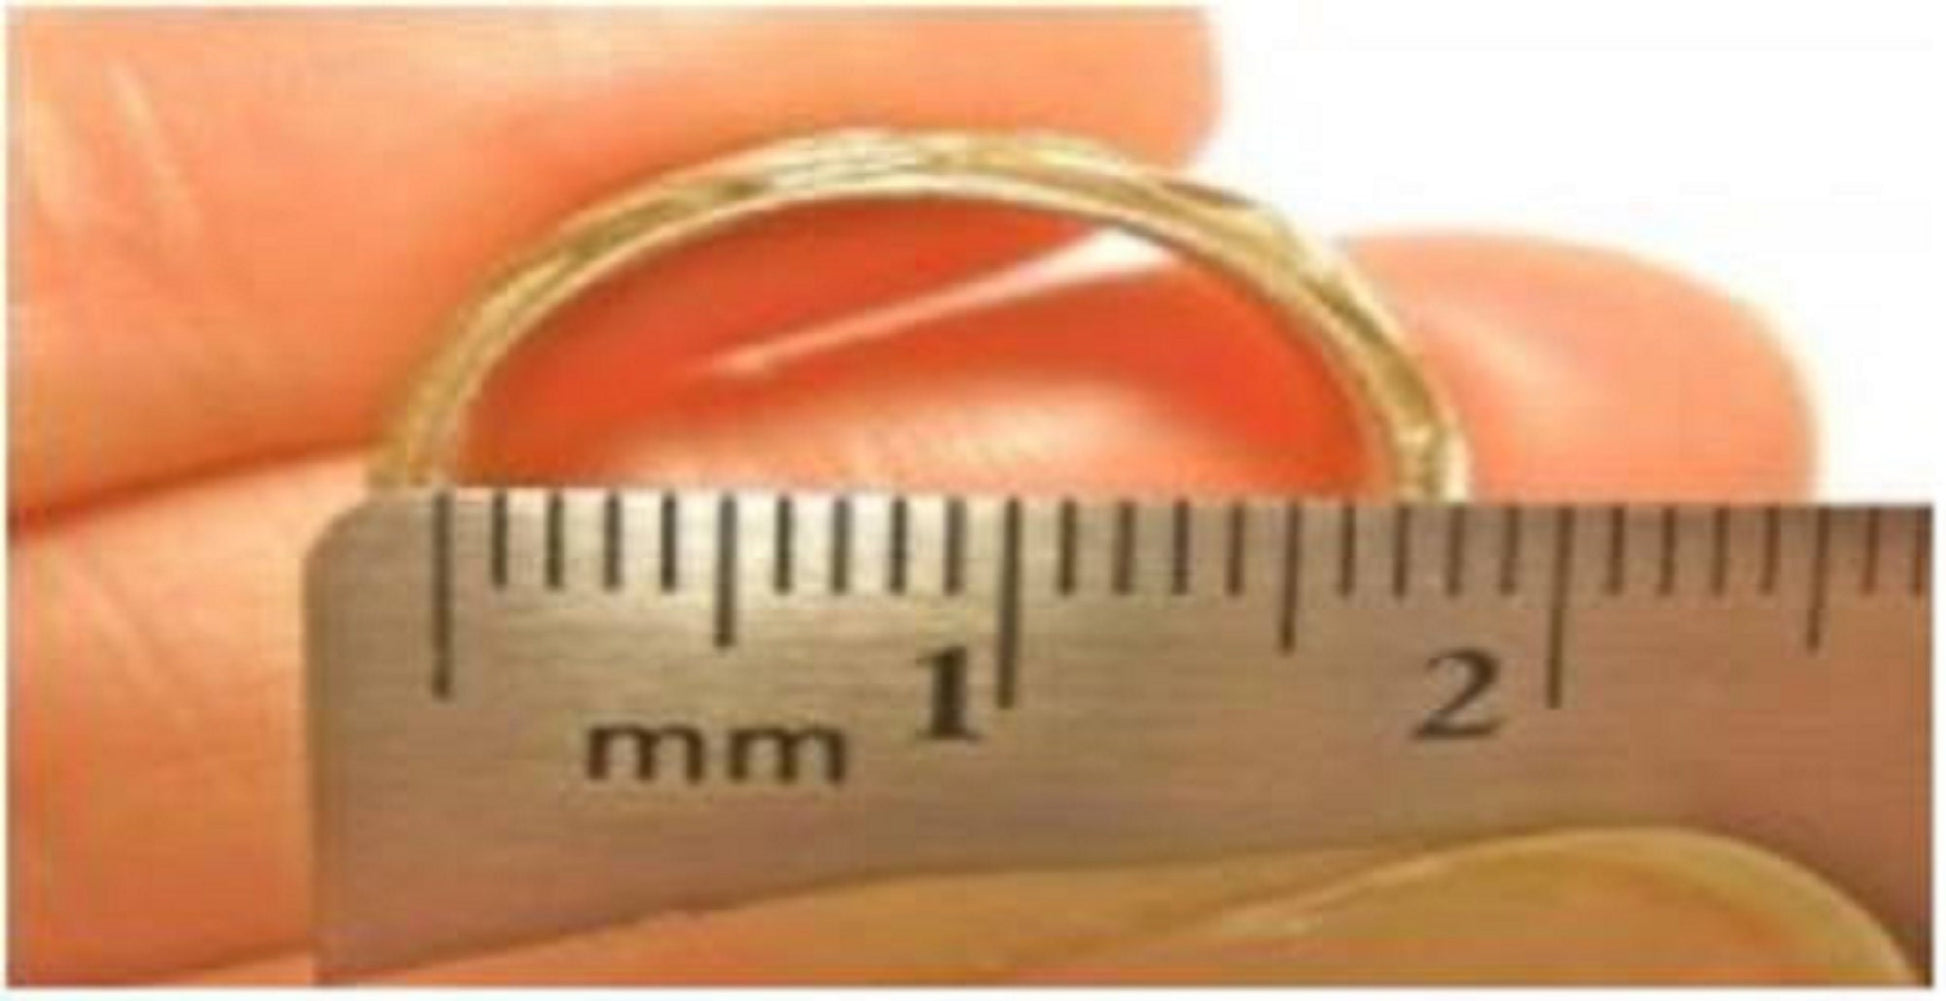 Titanium Couples 18k Gold Plated Ring Set Beveled with Cubic Zirconia, Friendship, Promise, Engagement, Wedding